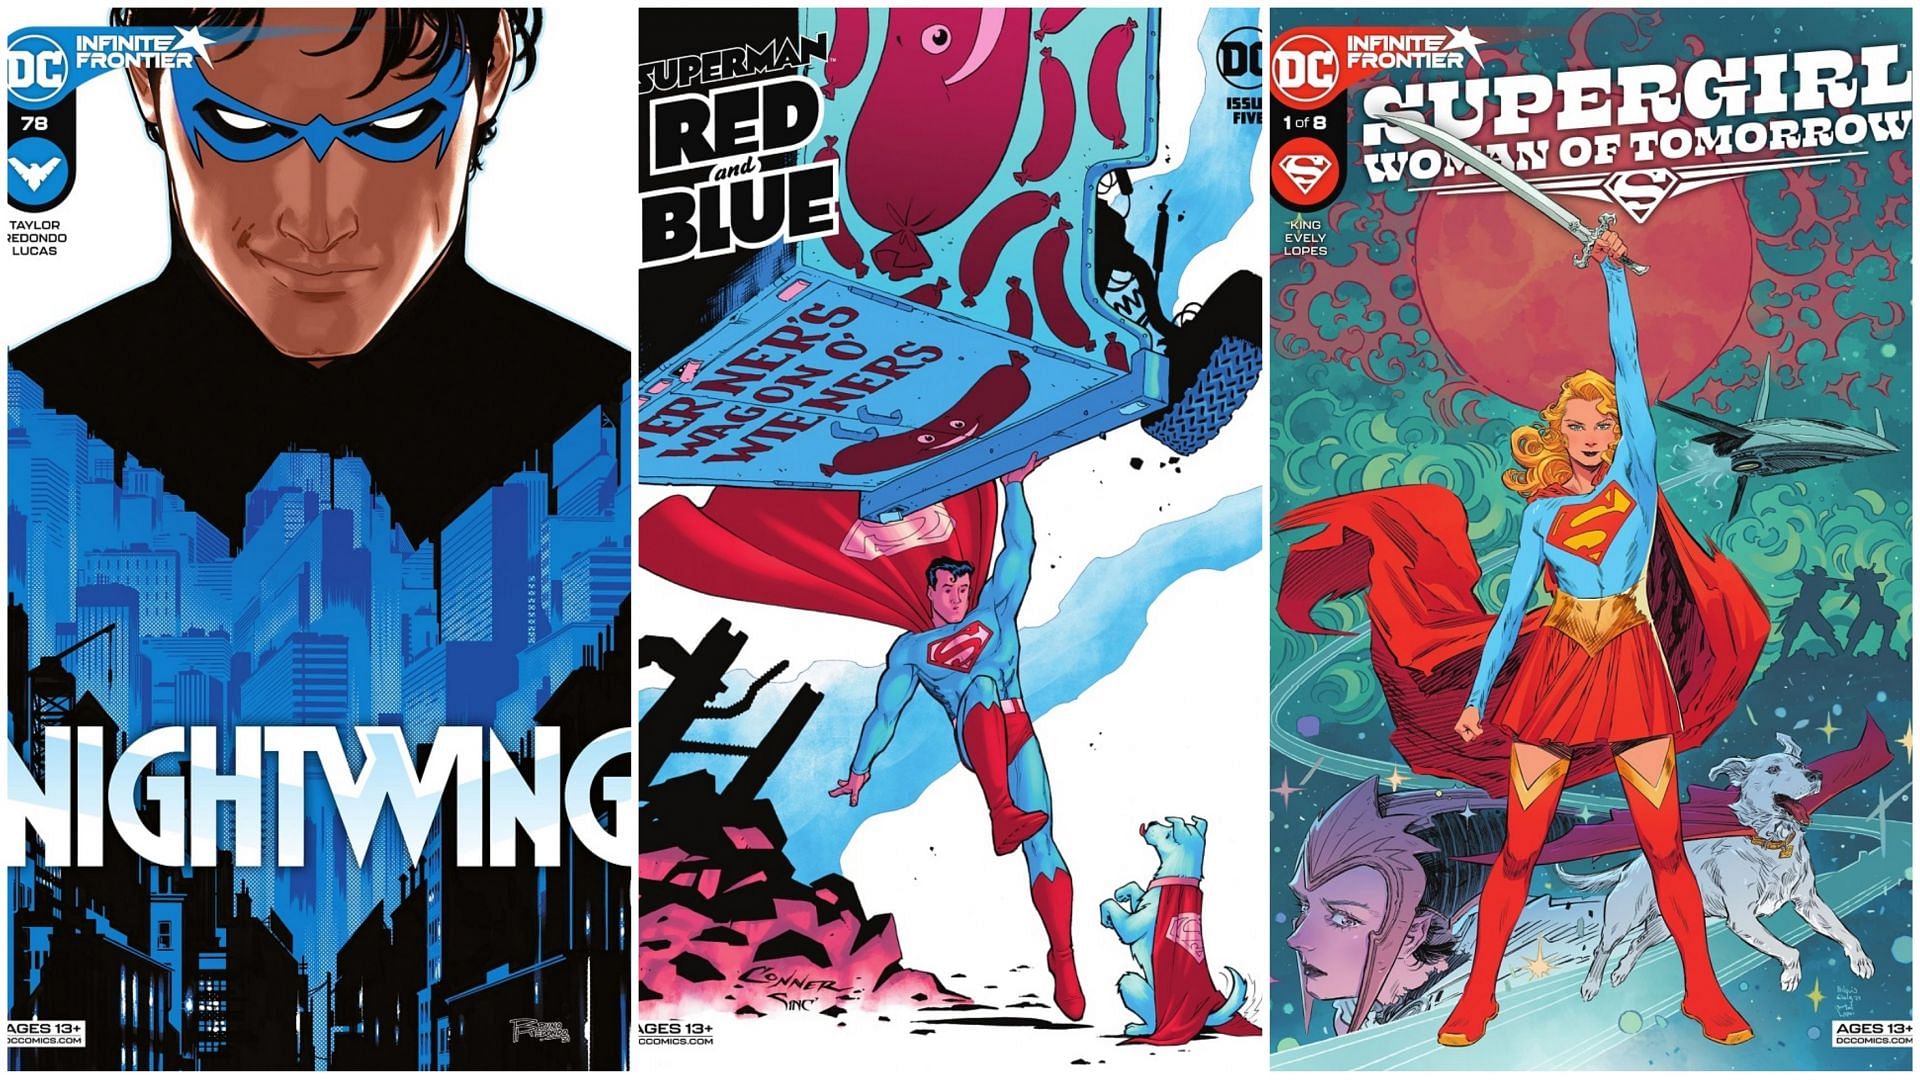 Comic covers (Image via DC Comics)